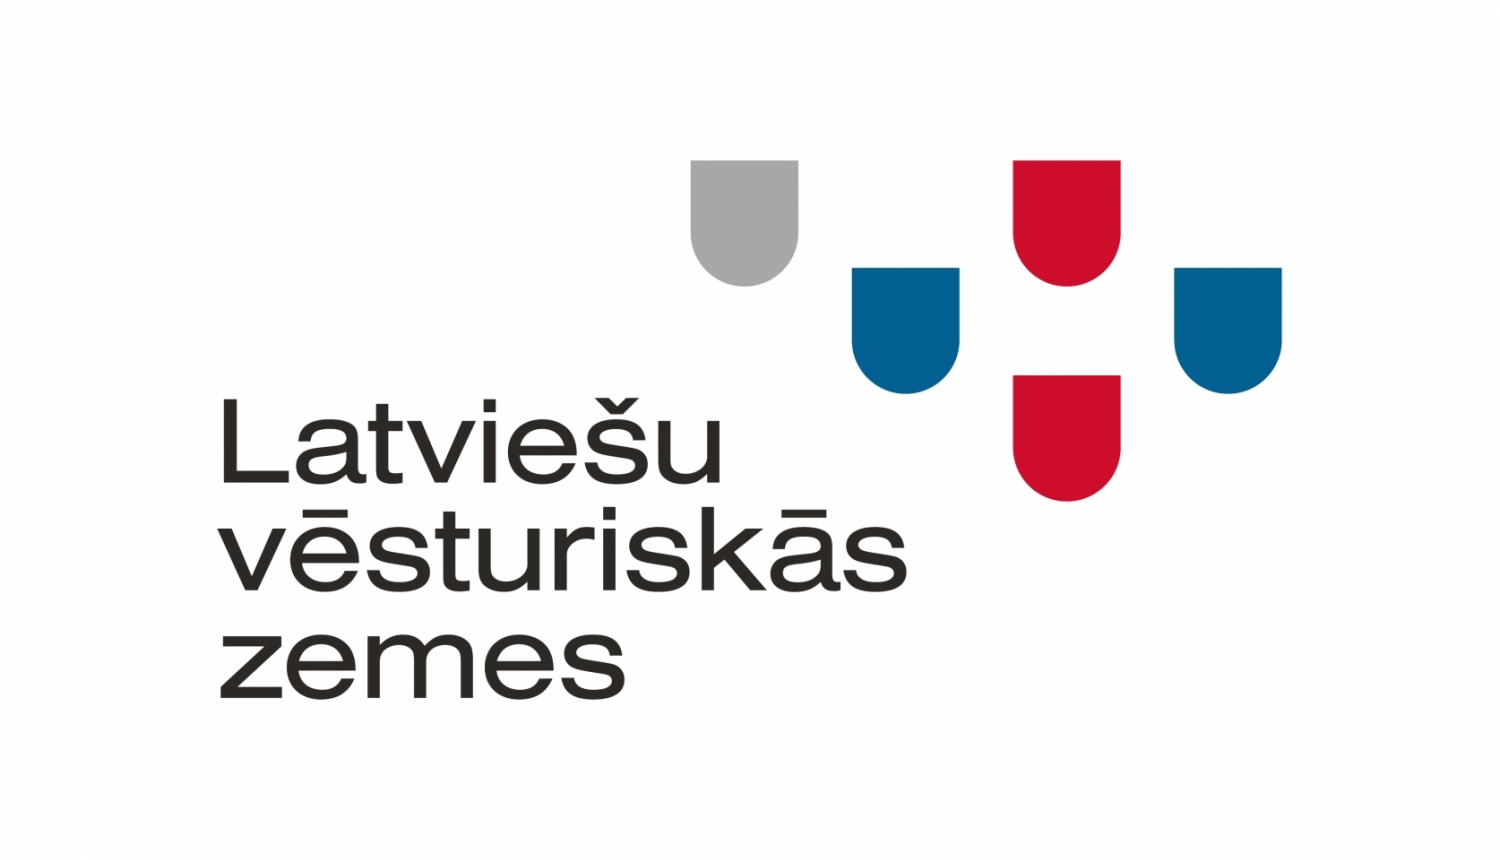 lvz logo